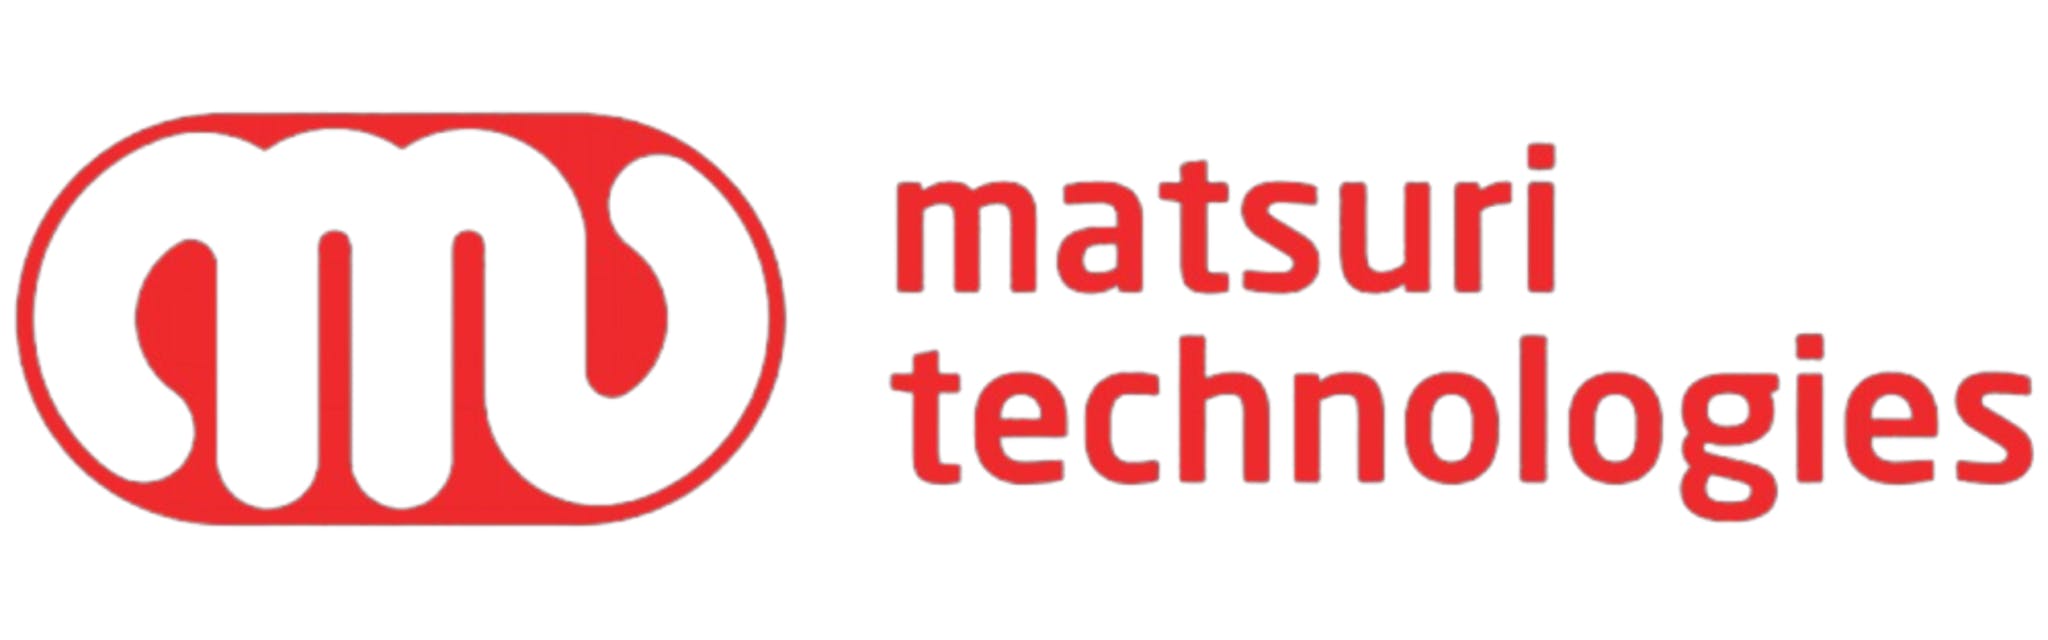 matsuri technologies株式会社 - カバー画像